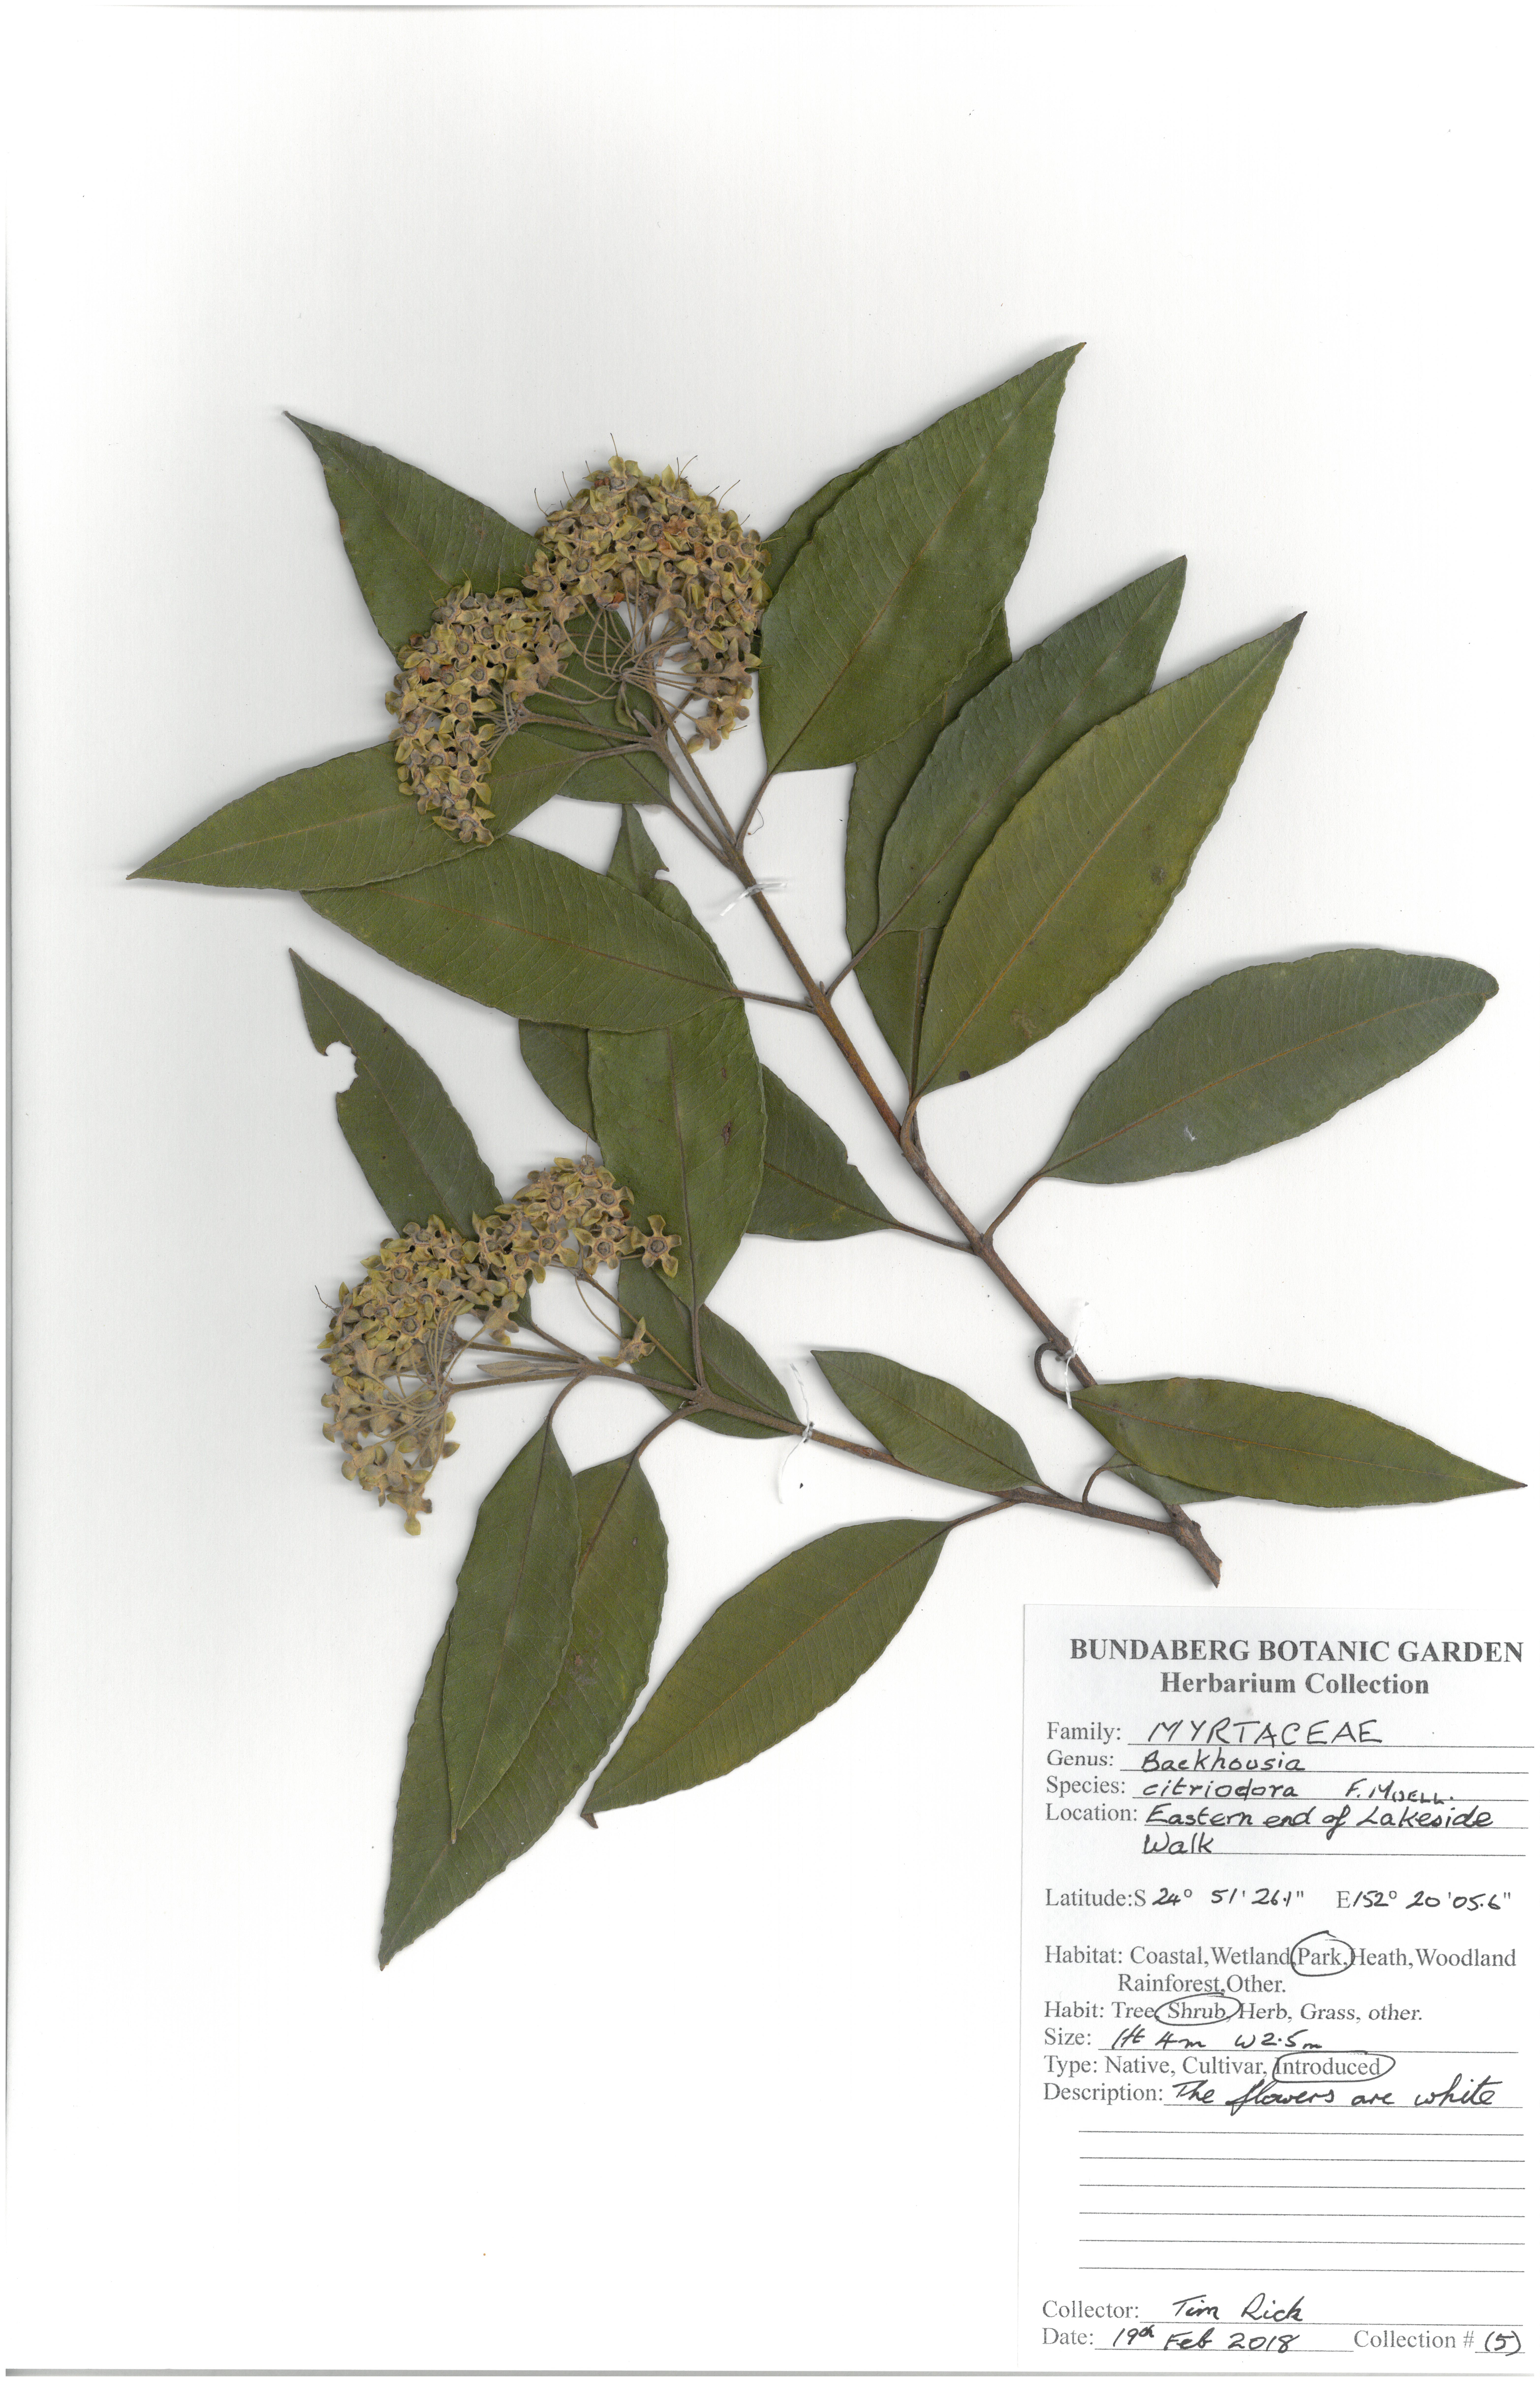 Myrtaceae backhousia citridora